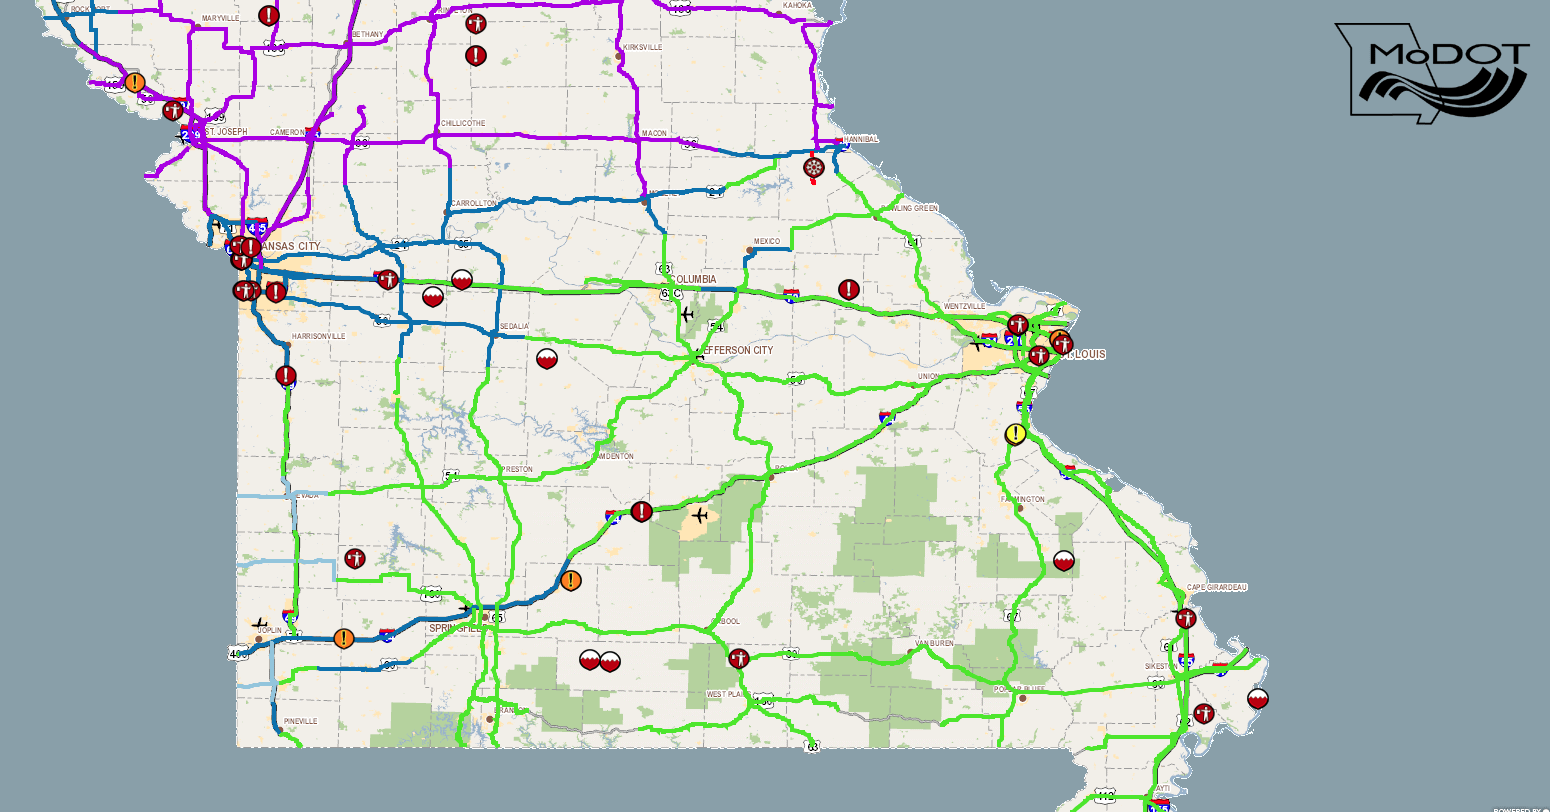 modot road closures map